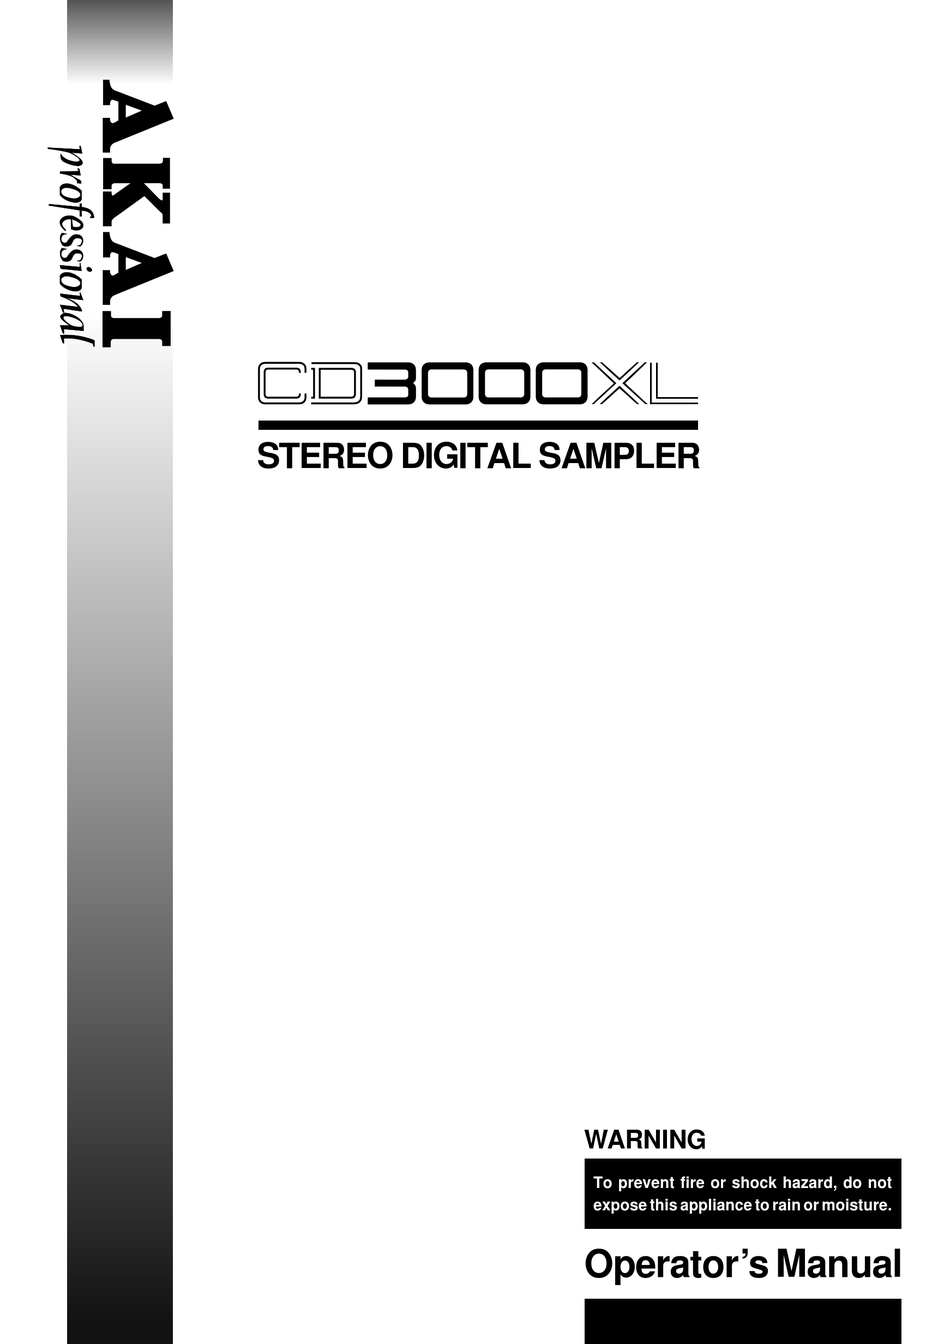 AKAI CD3000XL OPERATOR'S MANUAL Pdf Download | ManualsLib